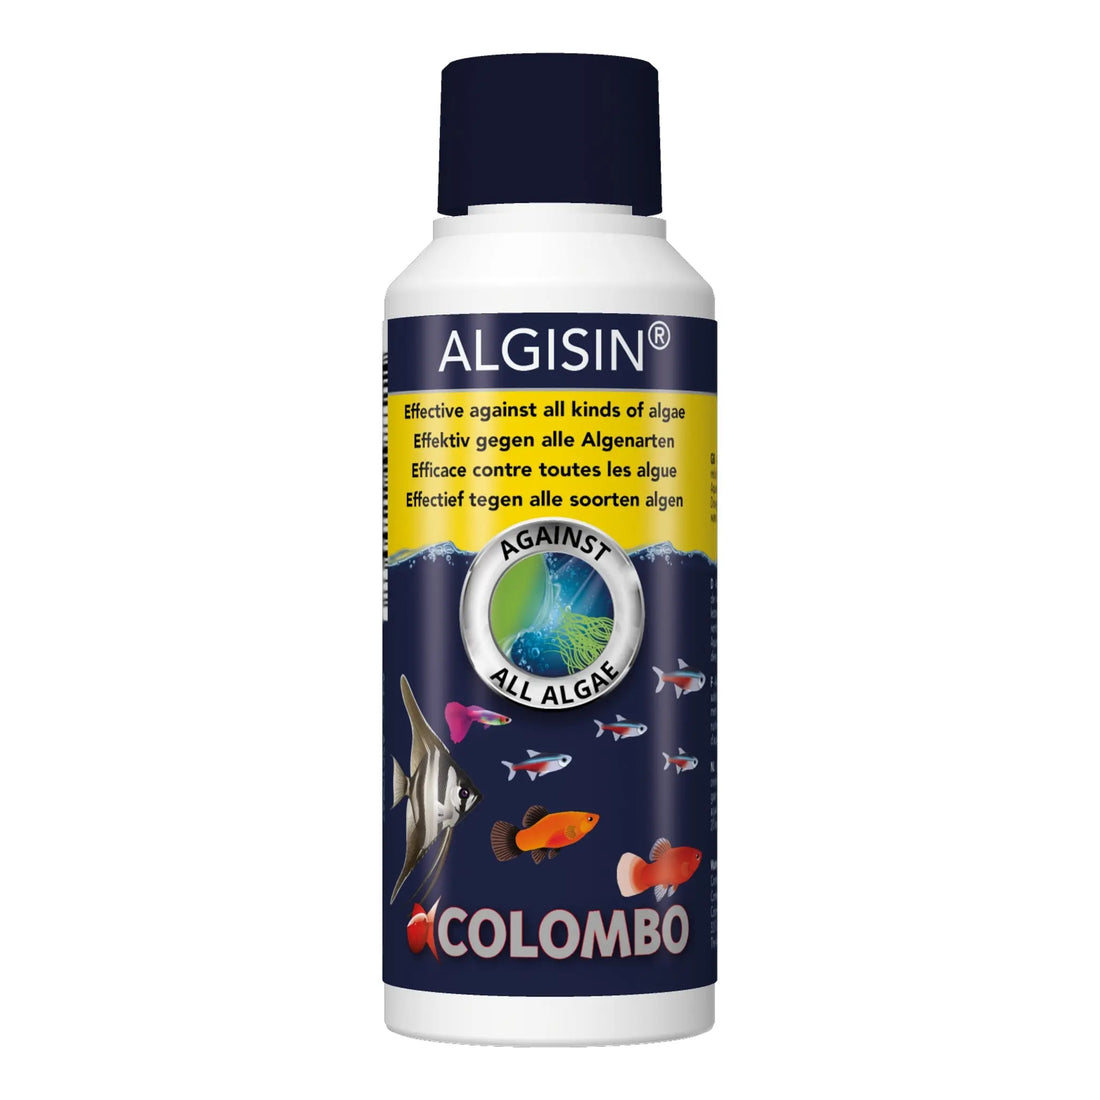 Colombo Algisin 250ml - effective against all kinds of algae - Aqua Essentials